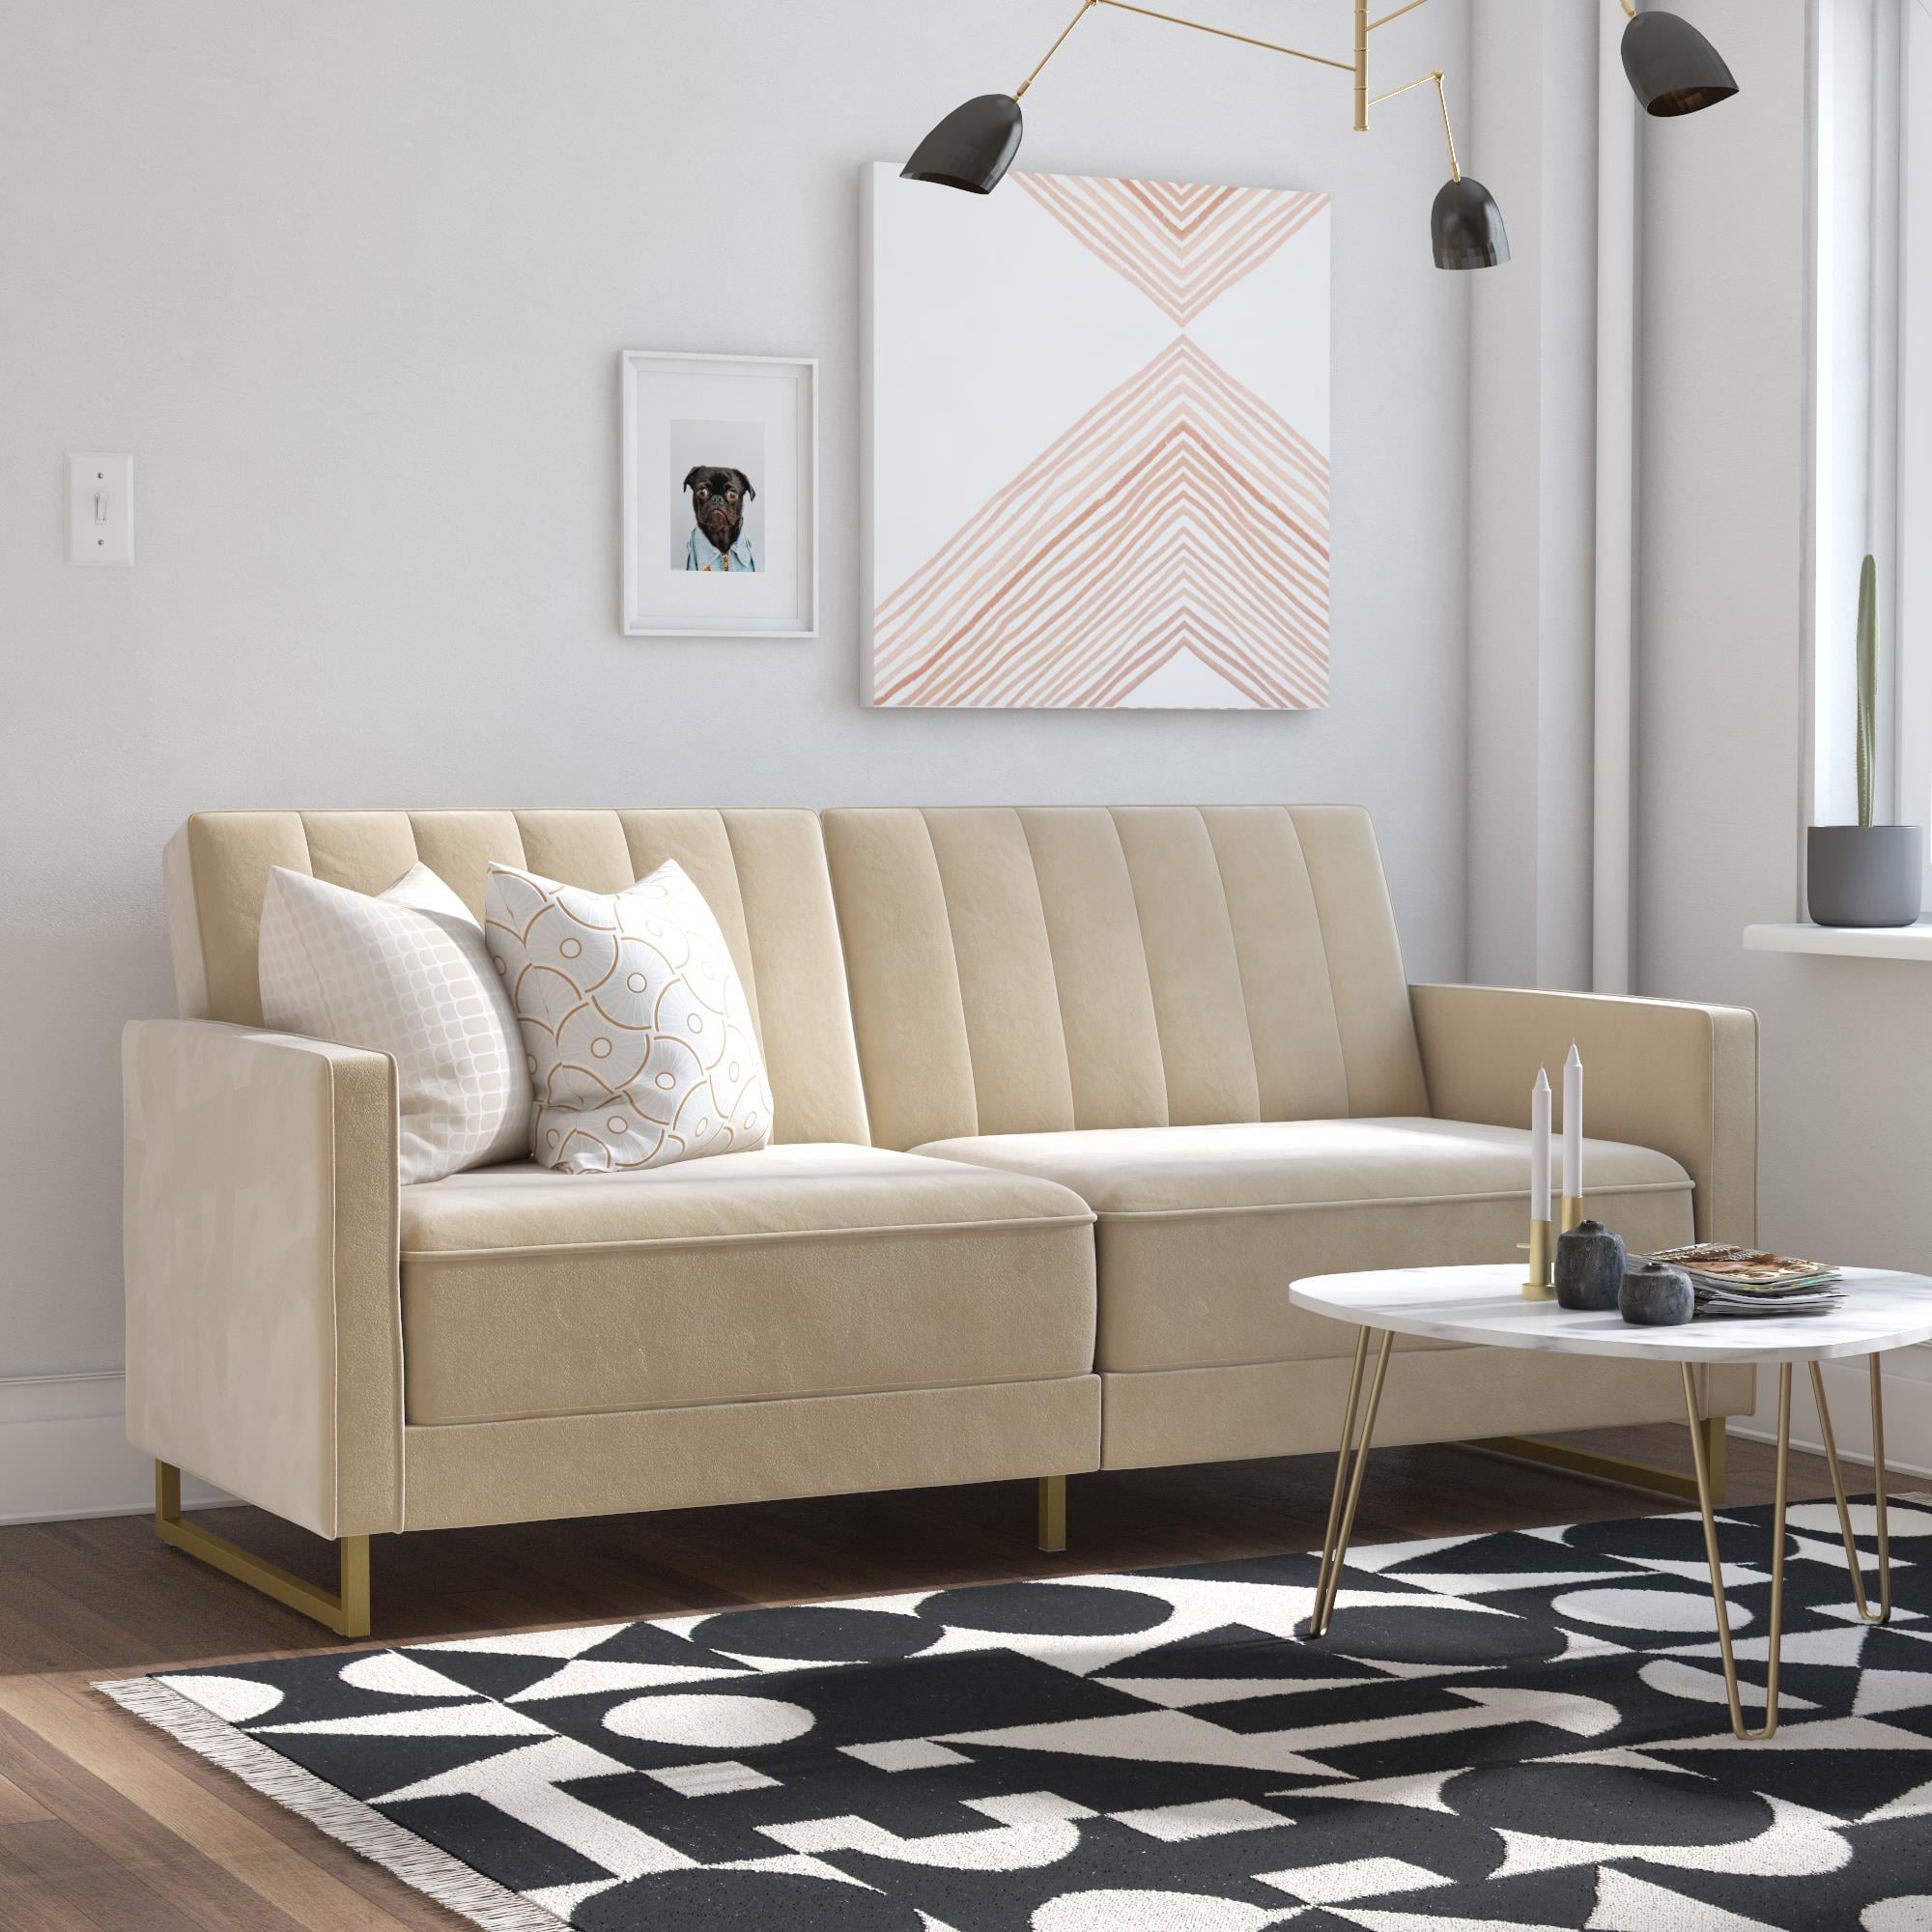 Novogratz Skylar Coil Futon, Modern Sofa Bed and Couch (Ivory Velvet) $216.40 + Free Shipping